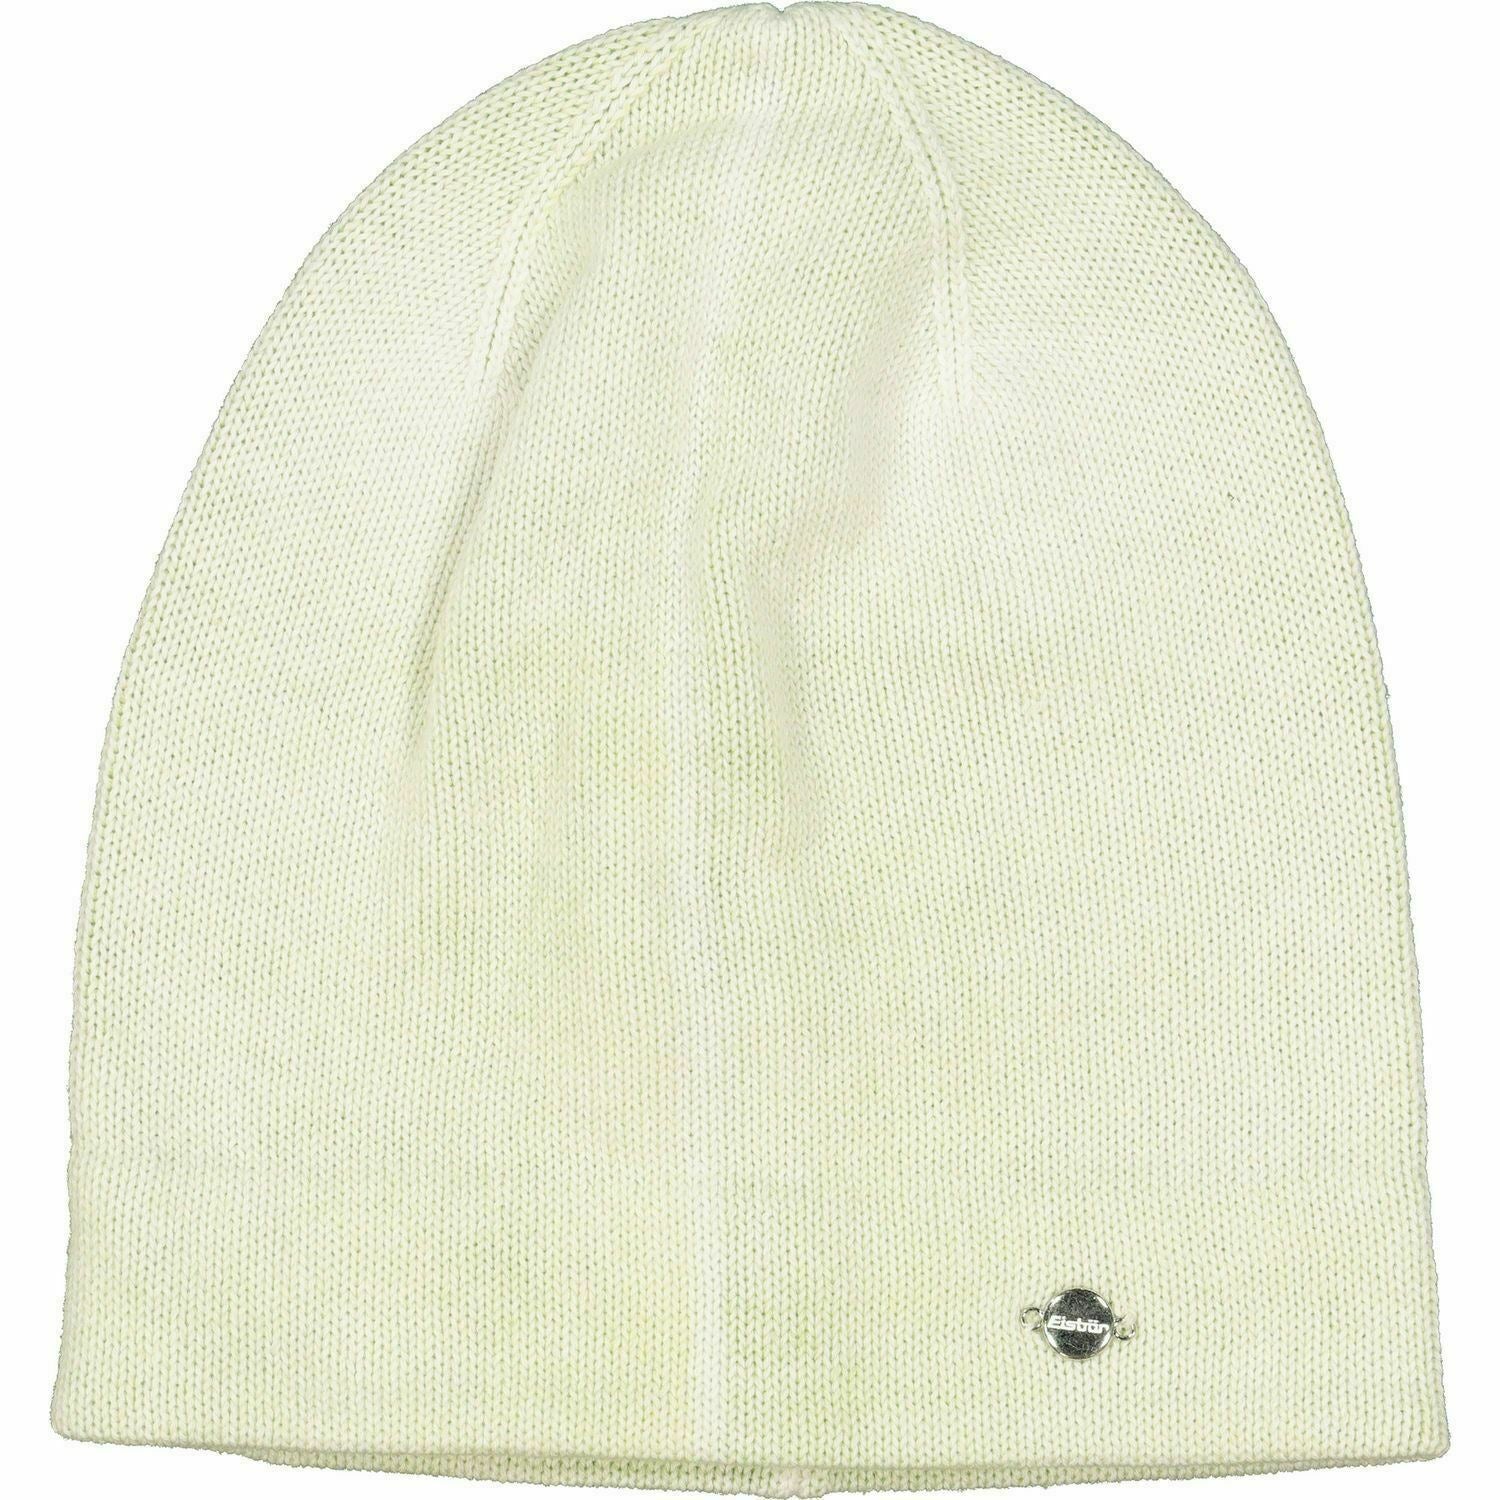 JOB LOT 37 x EISBAR Women's 'ALEC' Beanie Hat, Pastel Green